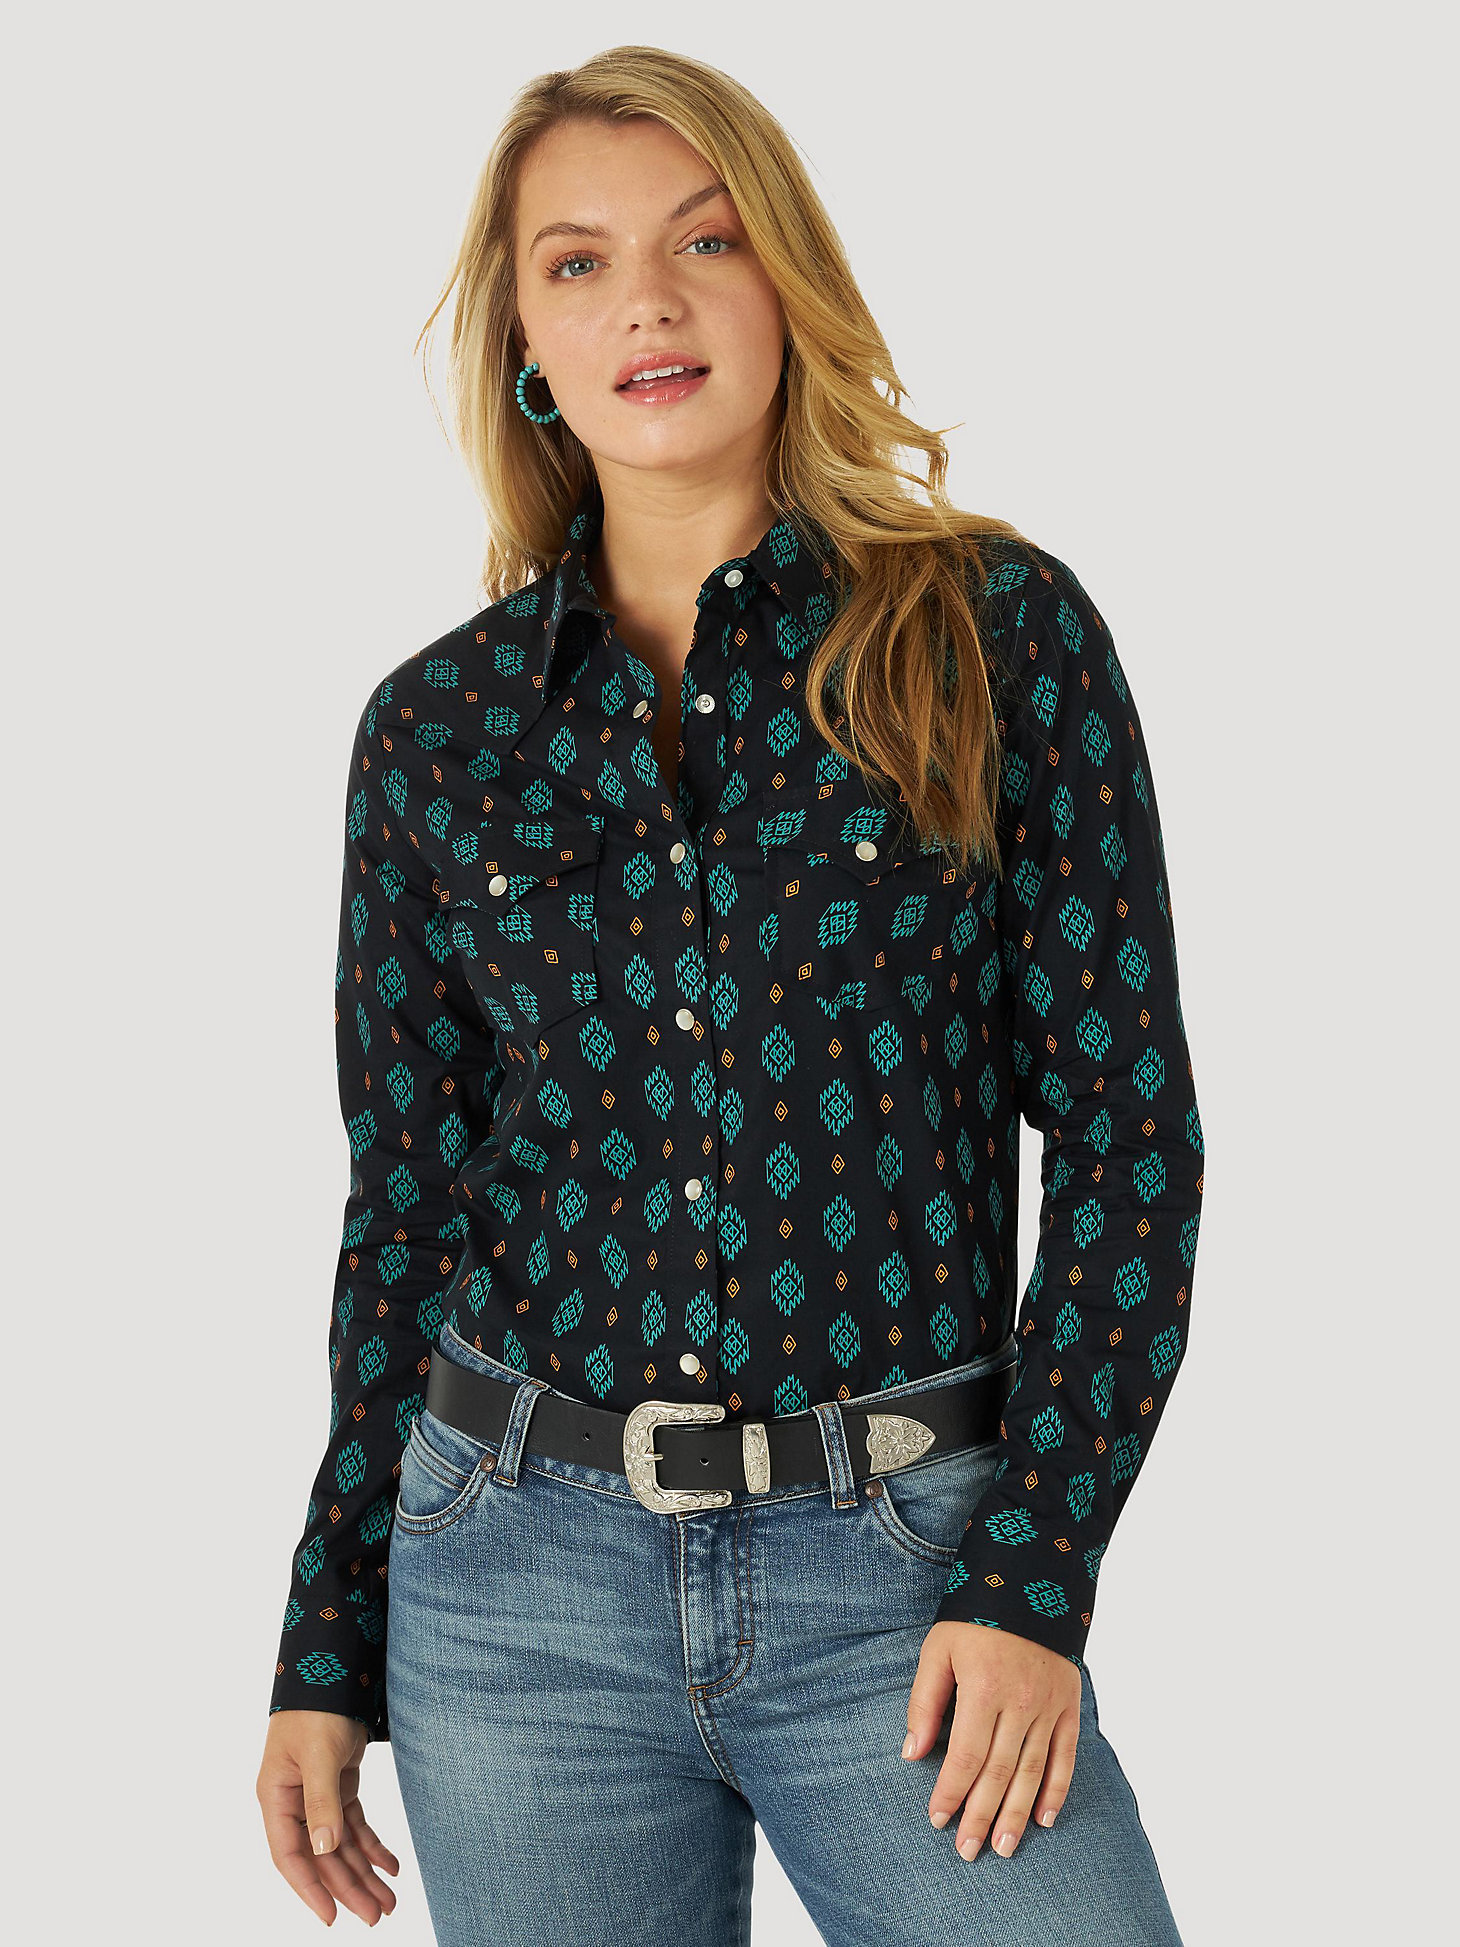 Women's Essential Long Sleeve Western Snap Print Shirt in Black alternative view 1